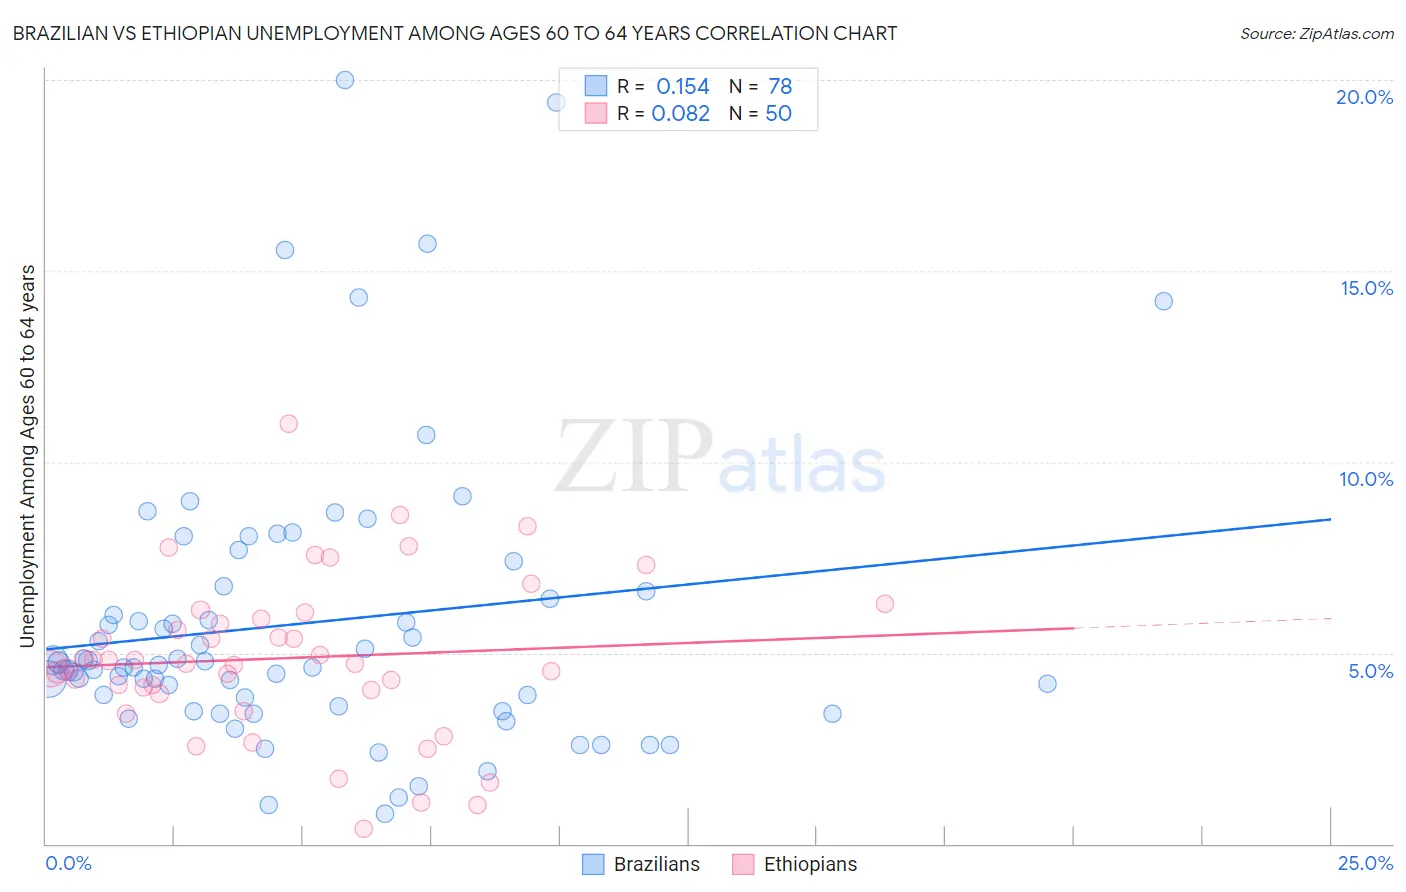 Brazilian vs Ethiopian Unemployment Among Ages 60 to 64 years